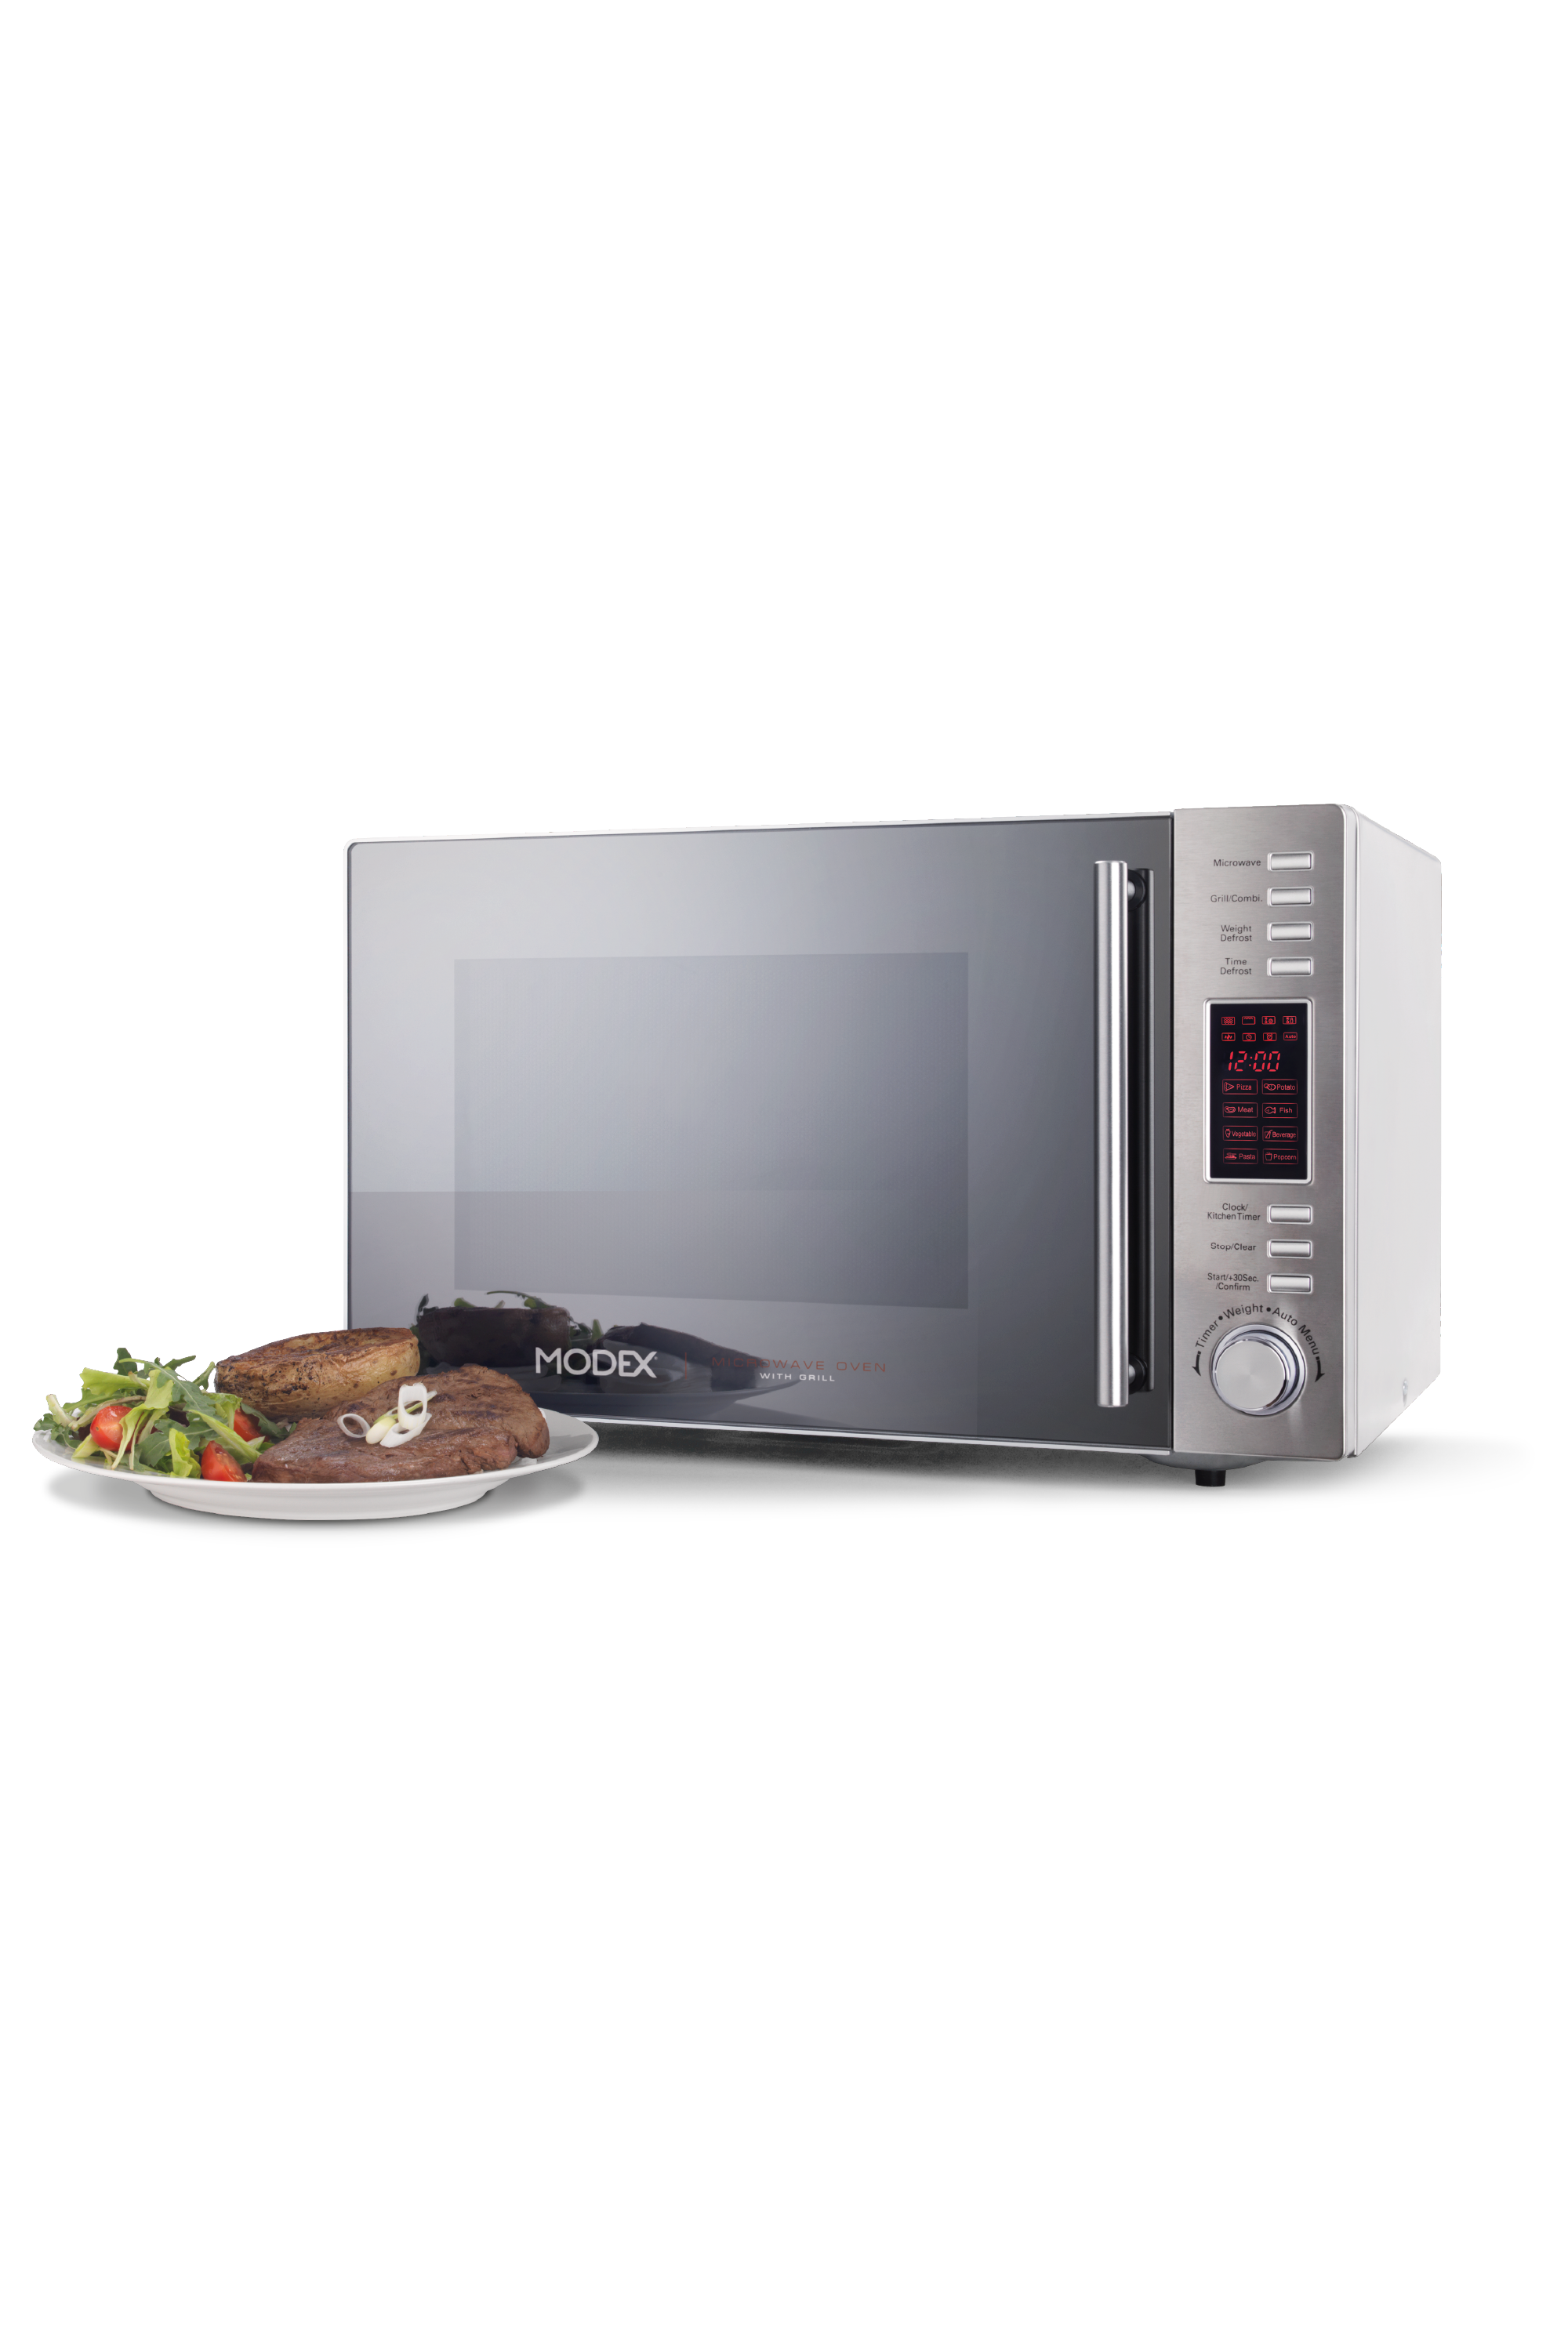 Mw1230 Microwave